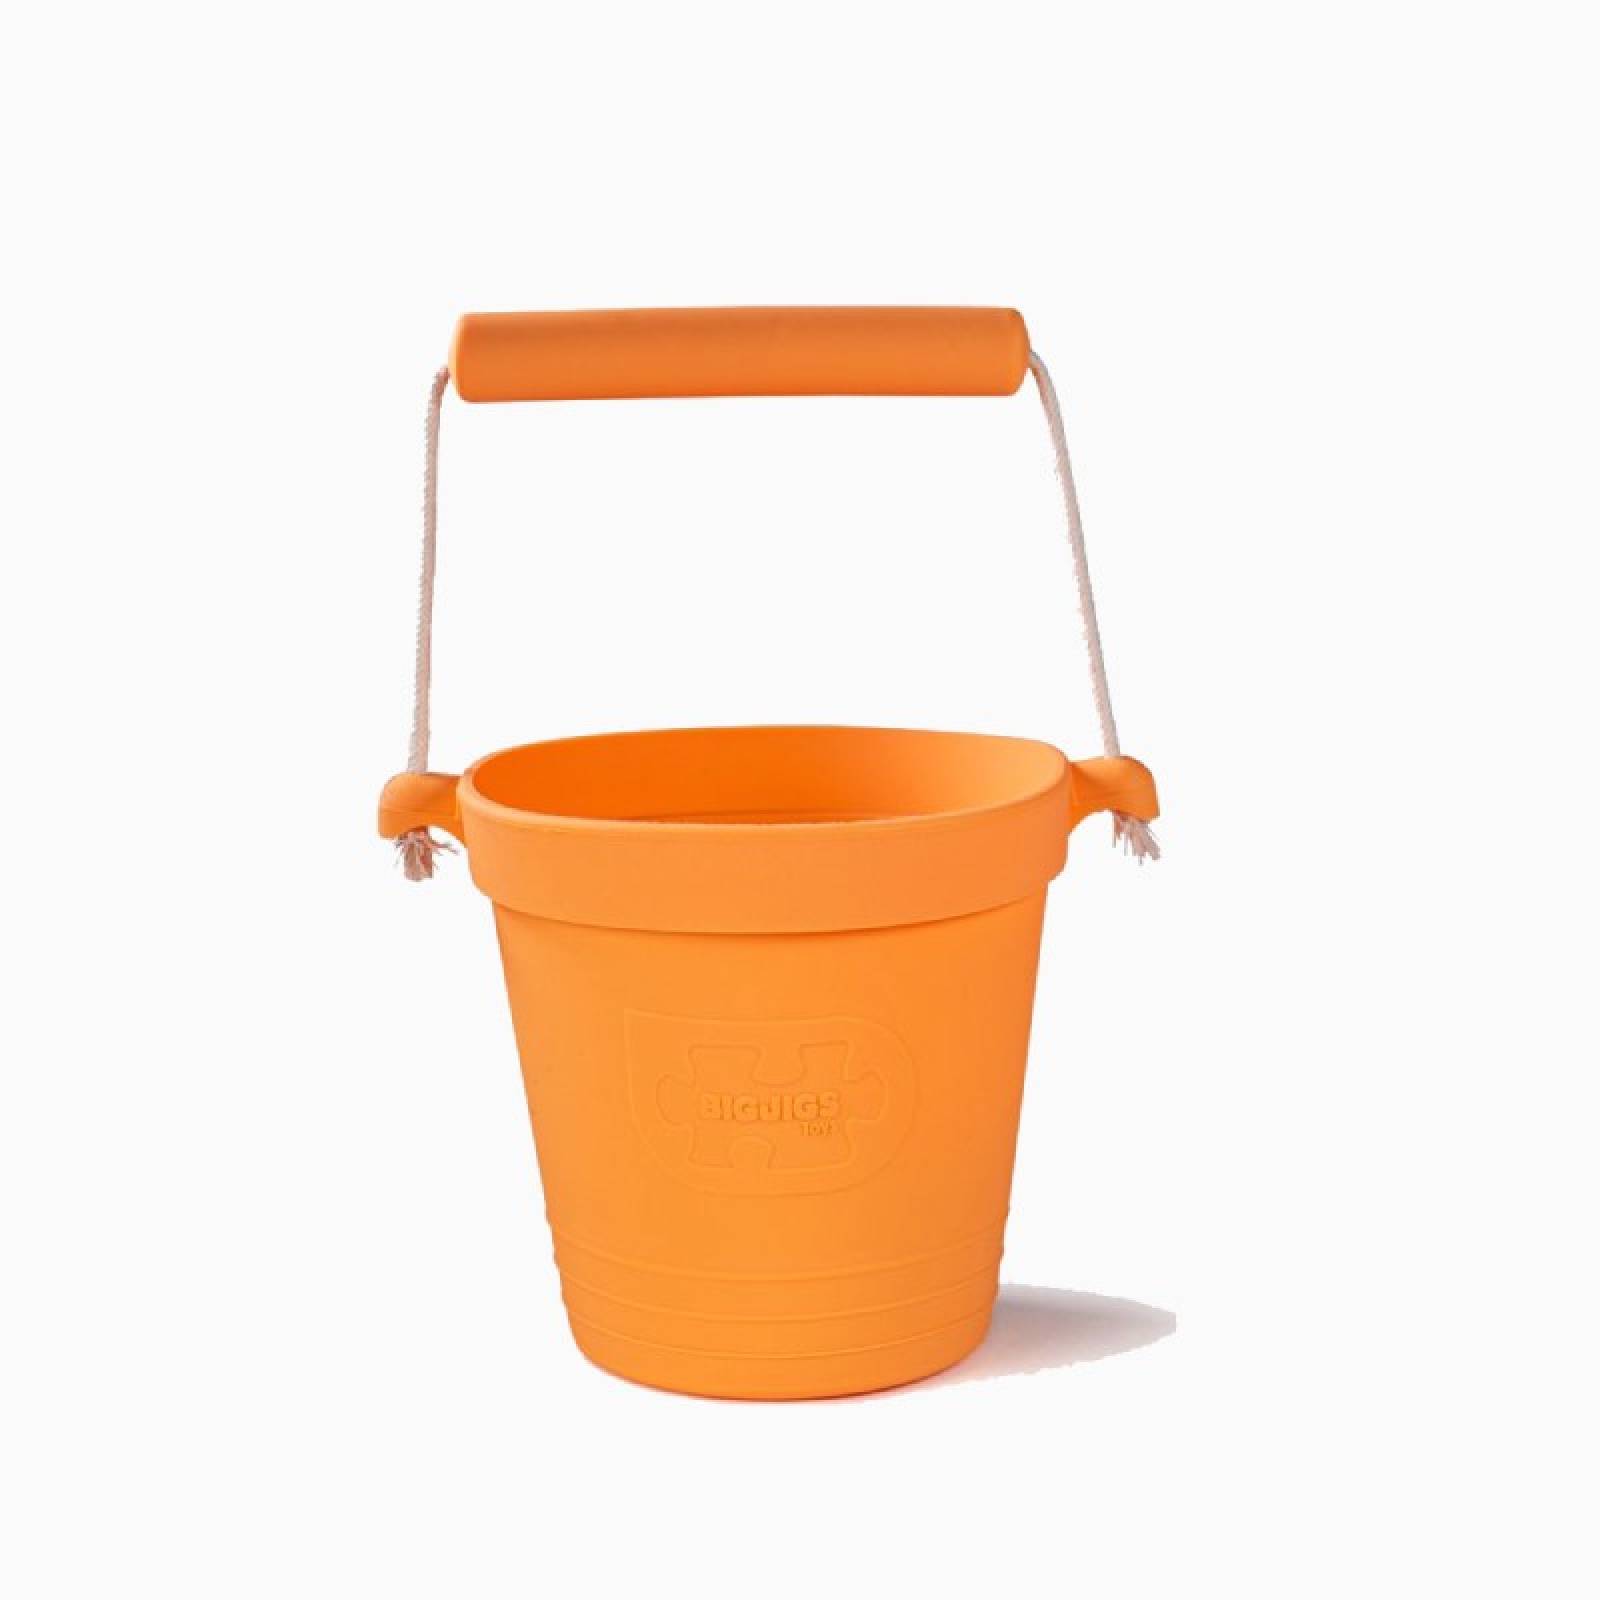 Children's Foldable Bucket In Apricot Orange 18m+